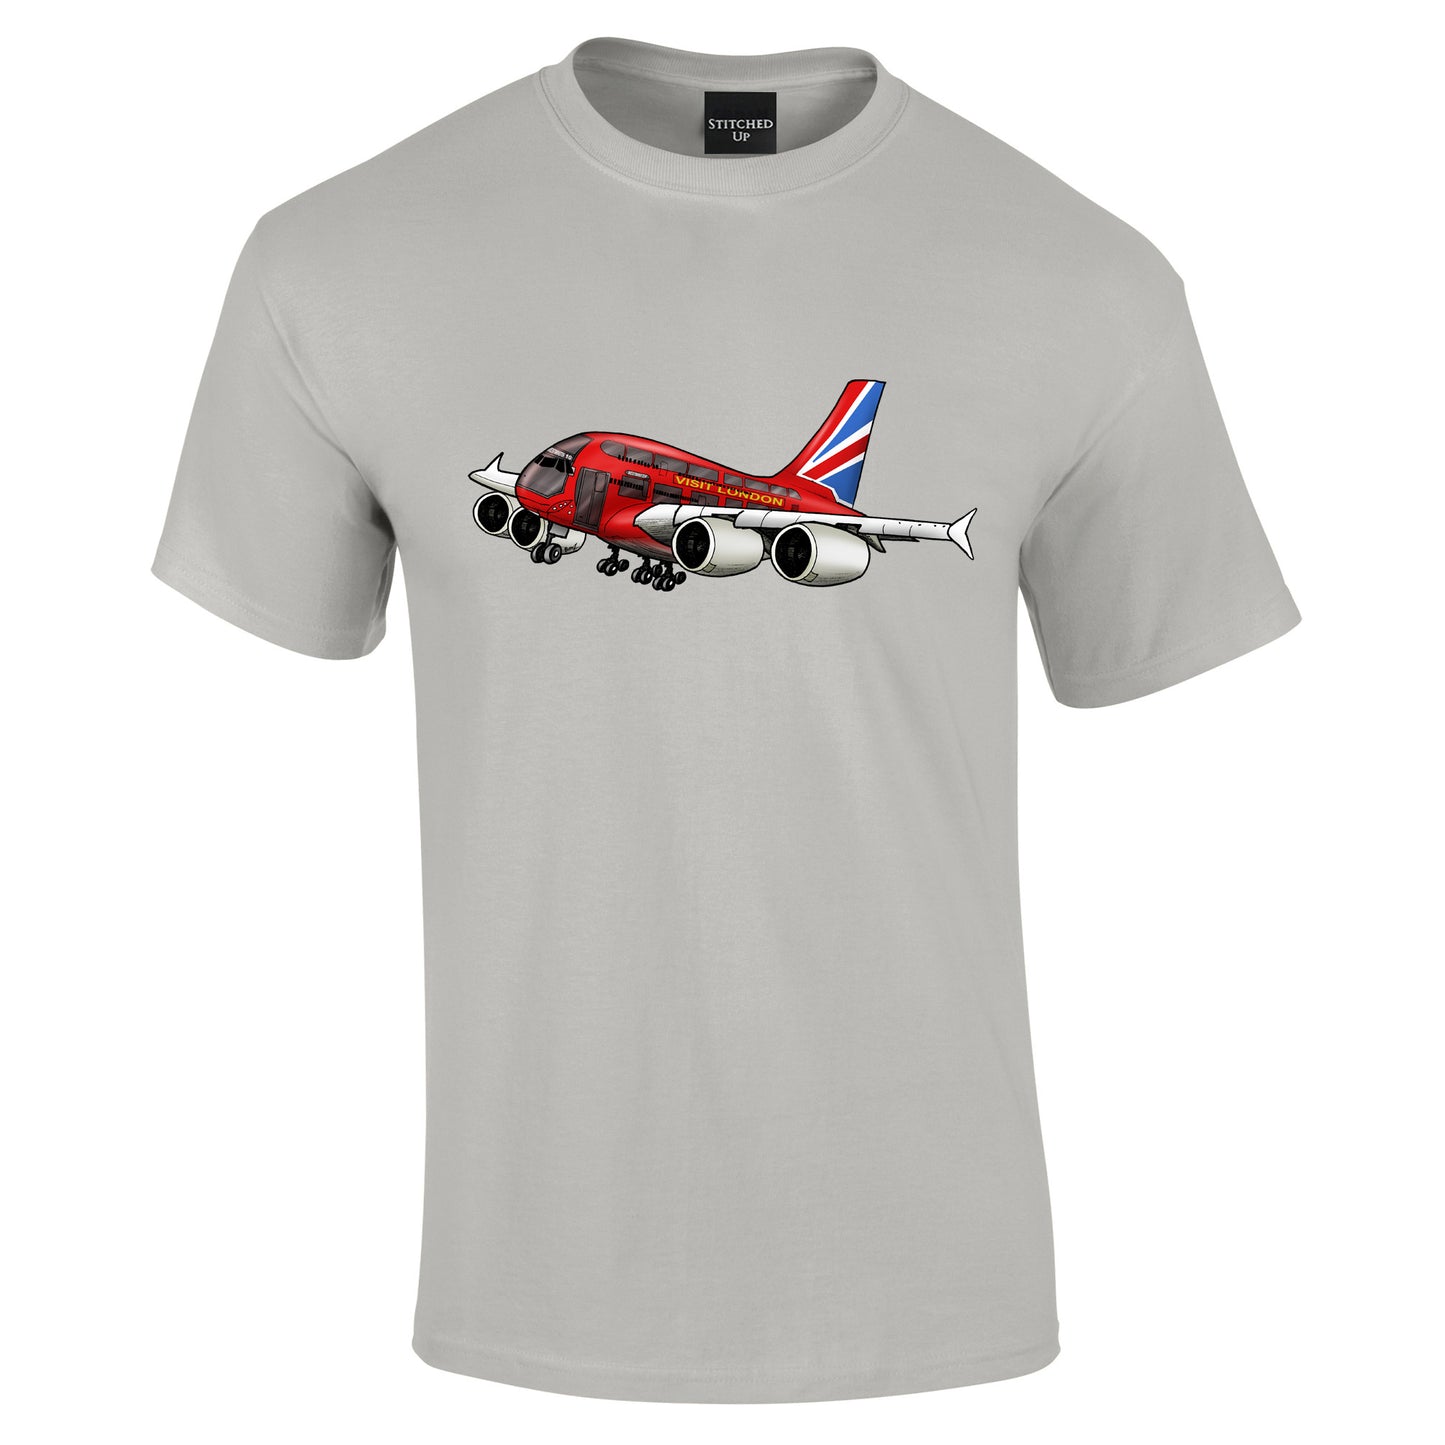 The London AirBus A380 T-Shirt